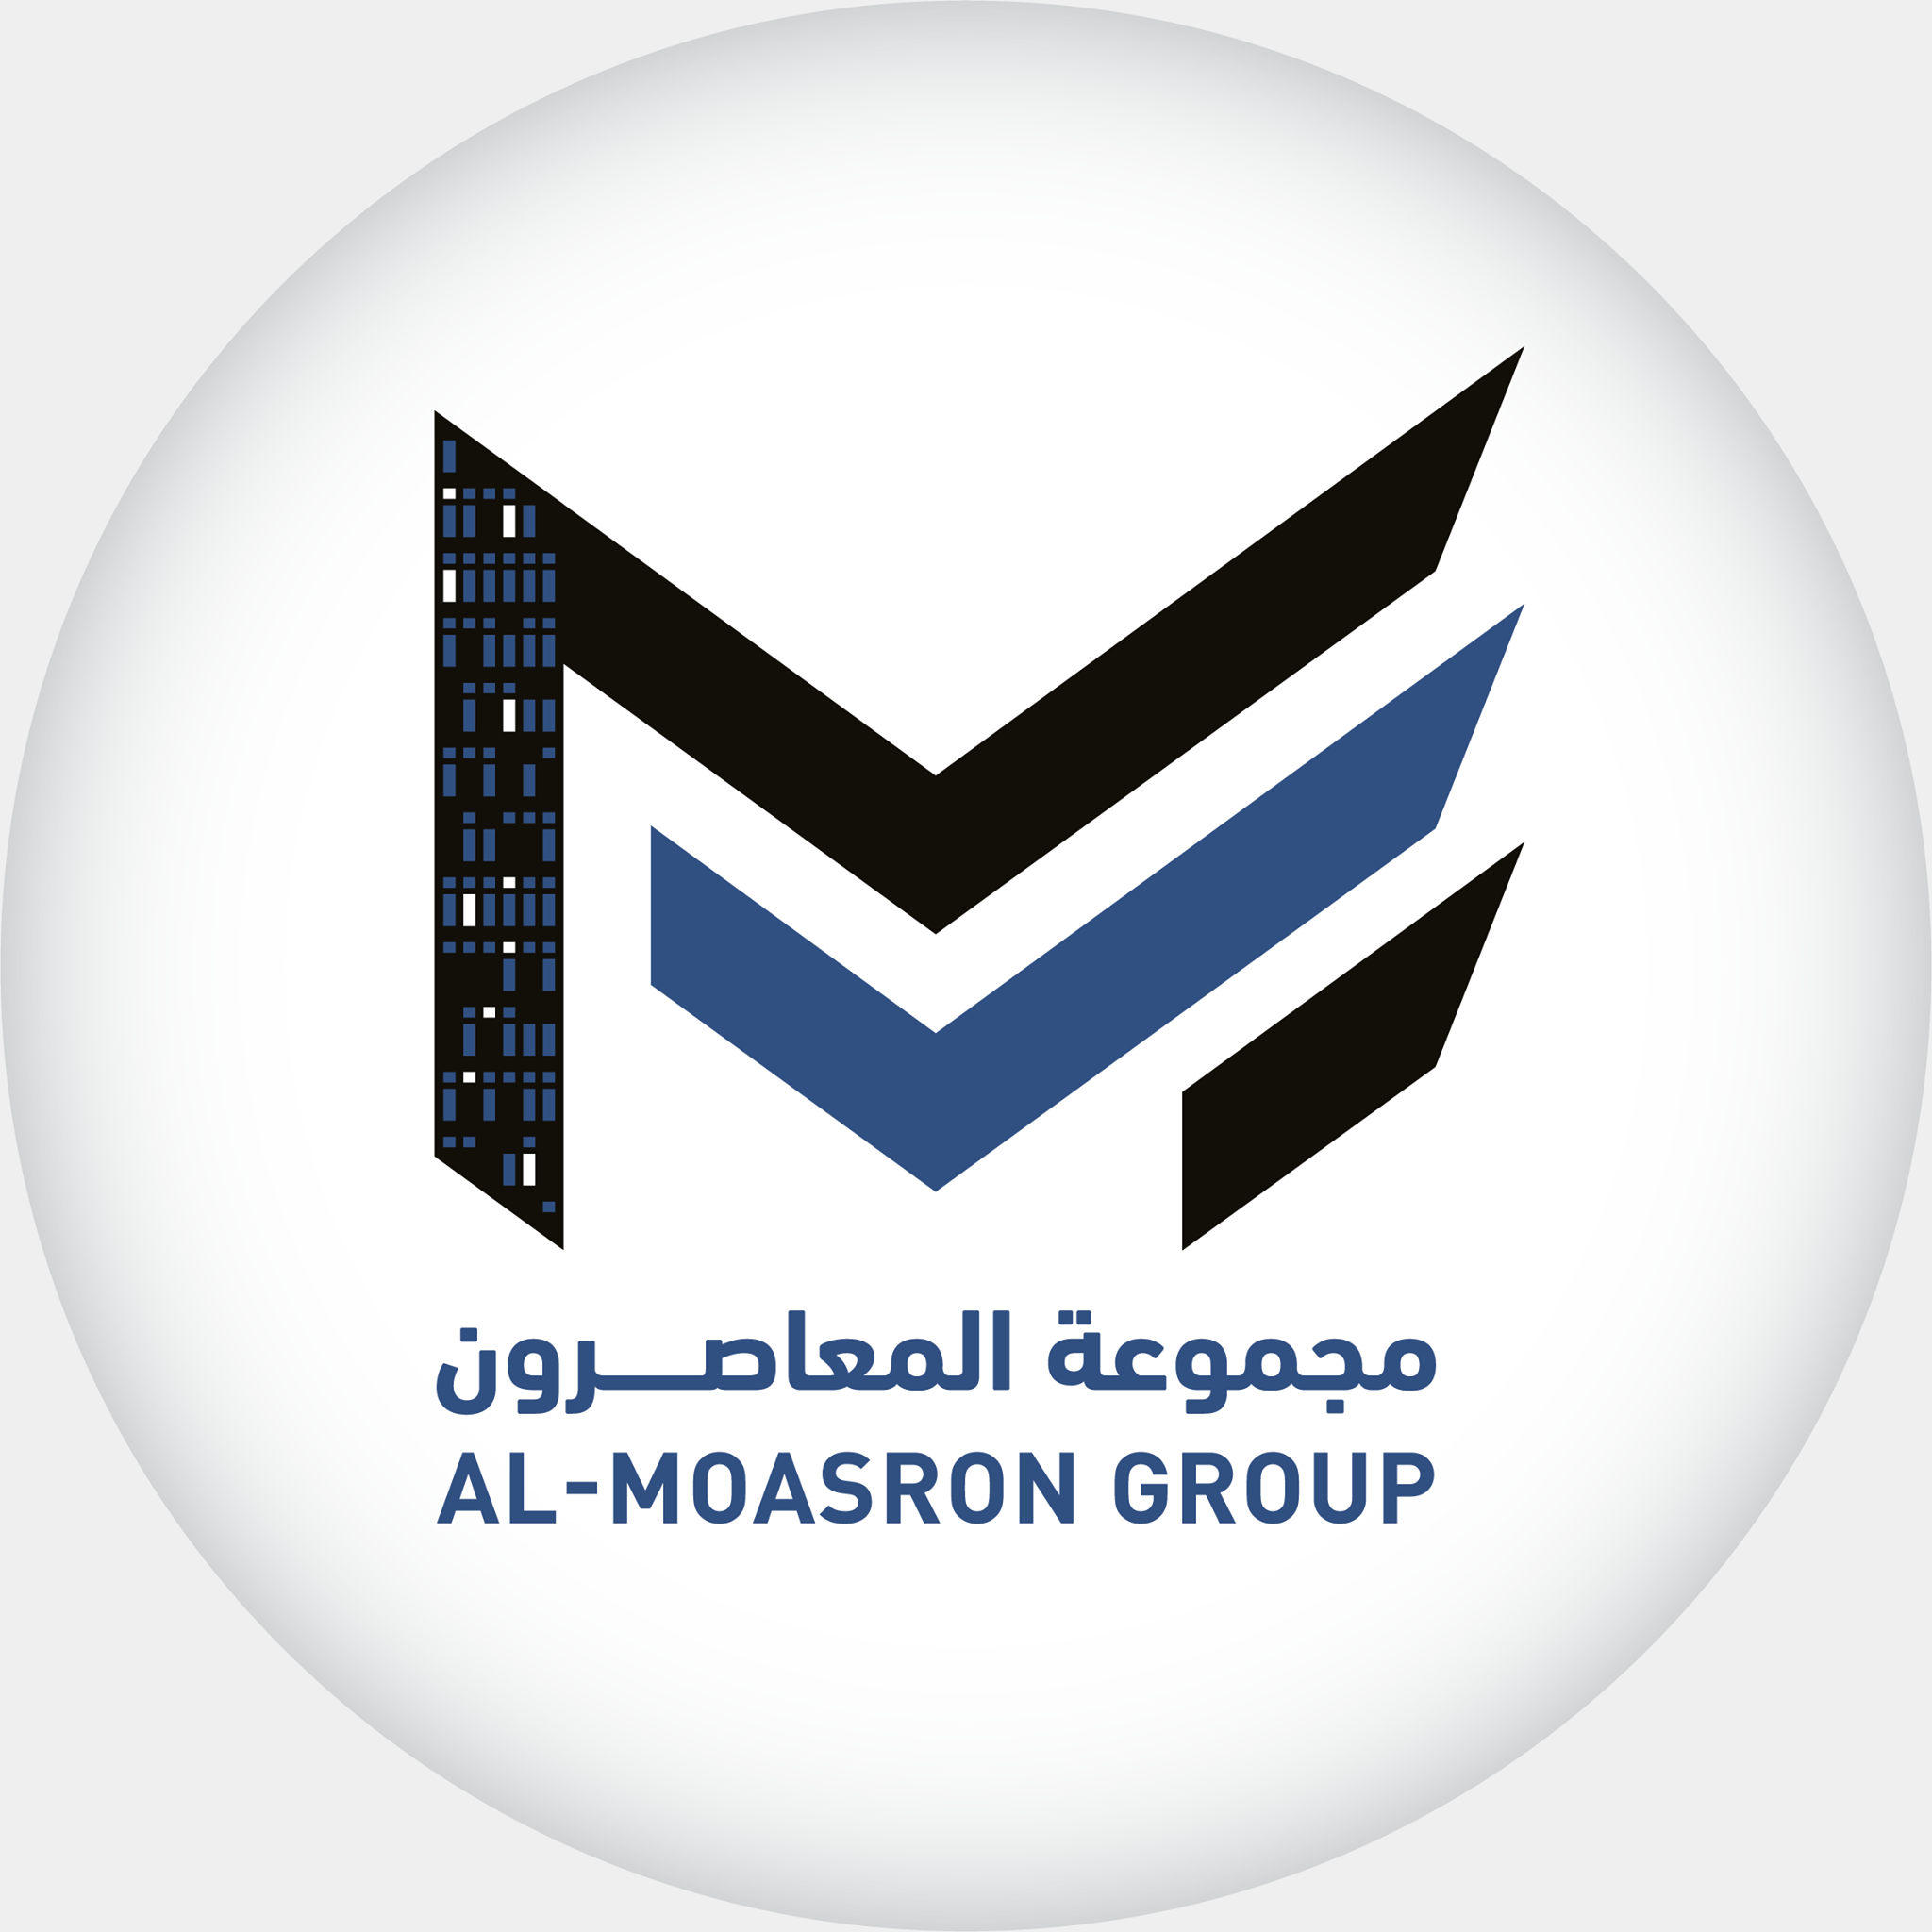 Al-Moasron Group